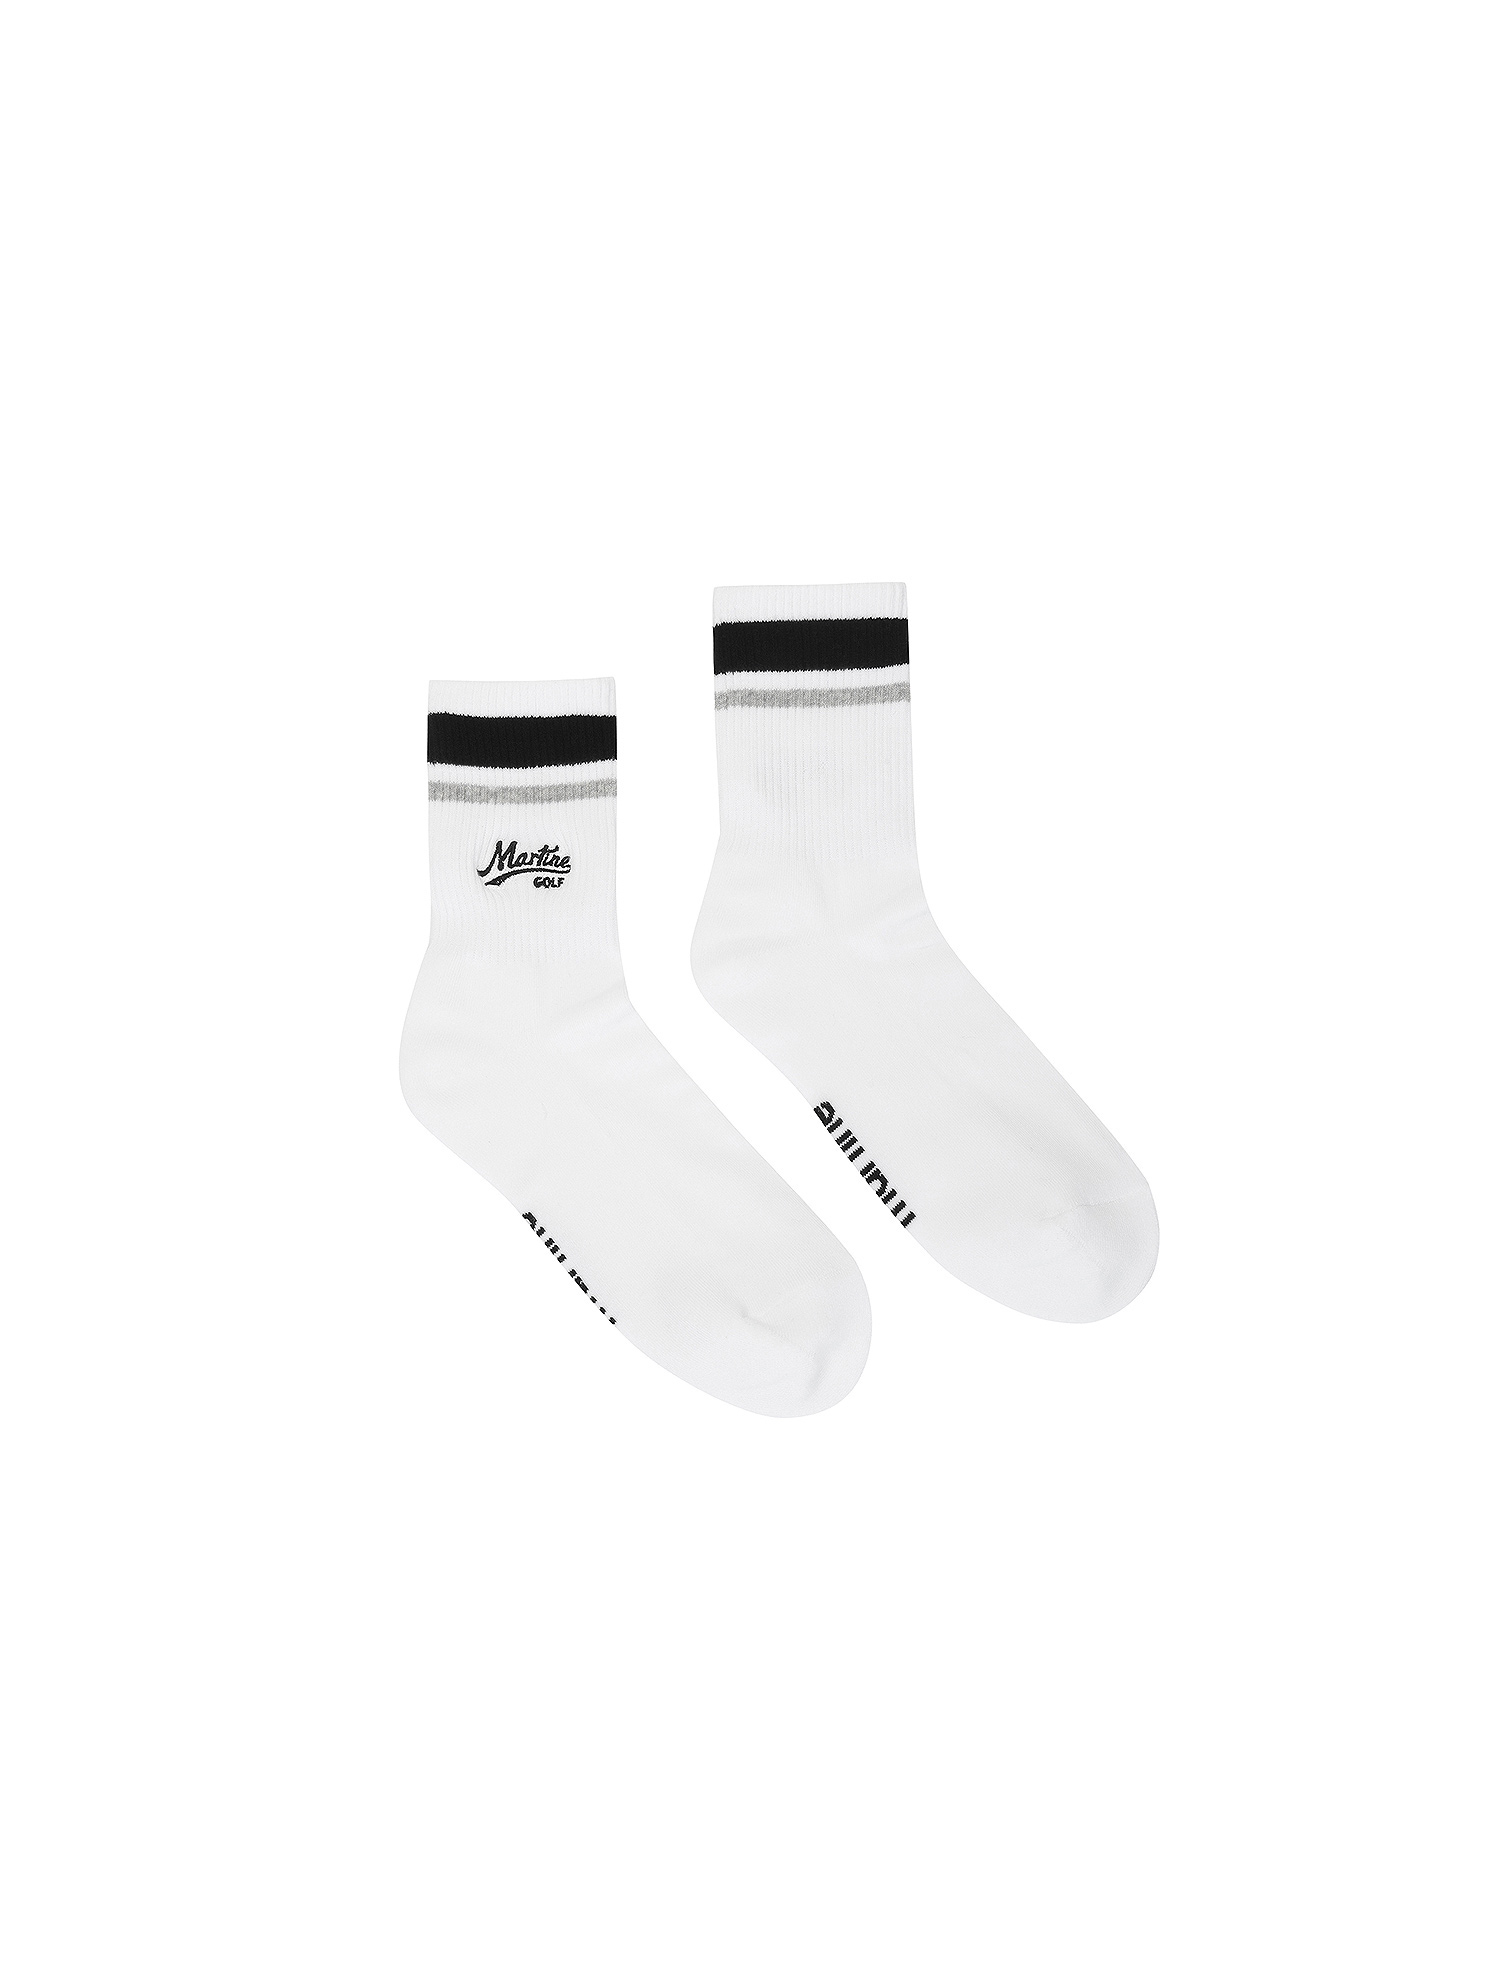 Symbol Point Middle Socks_Black (Men) (QMAESC10339)